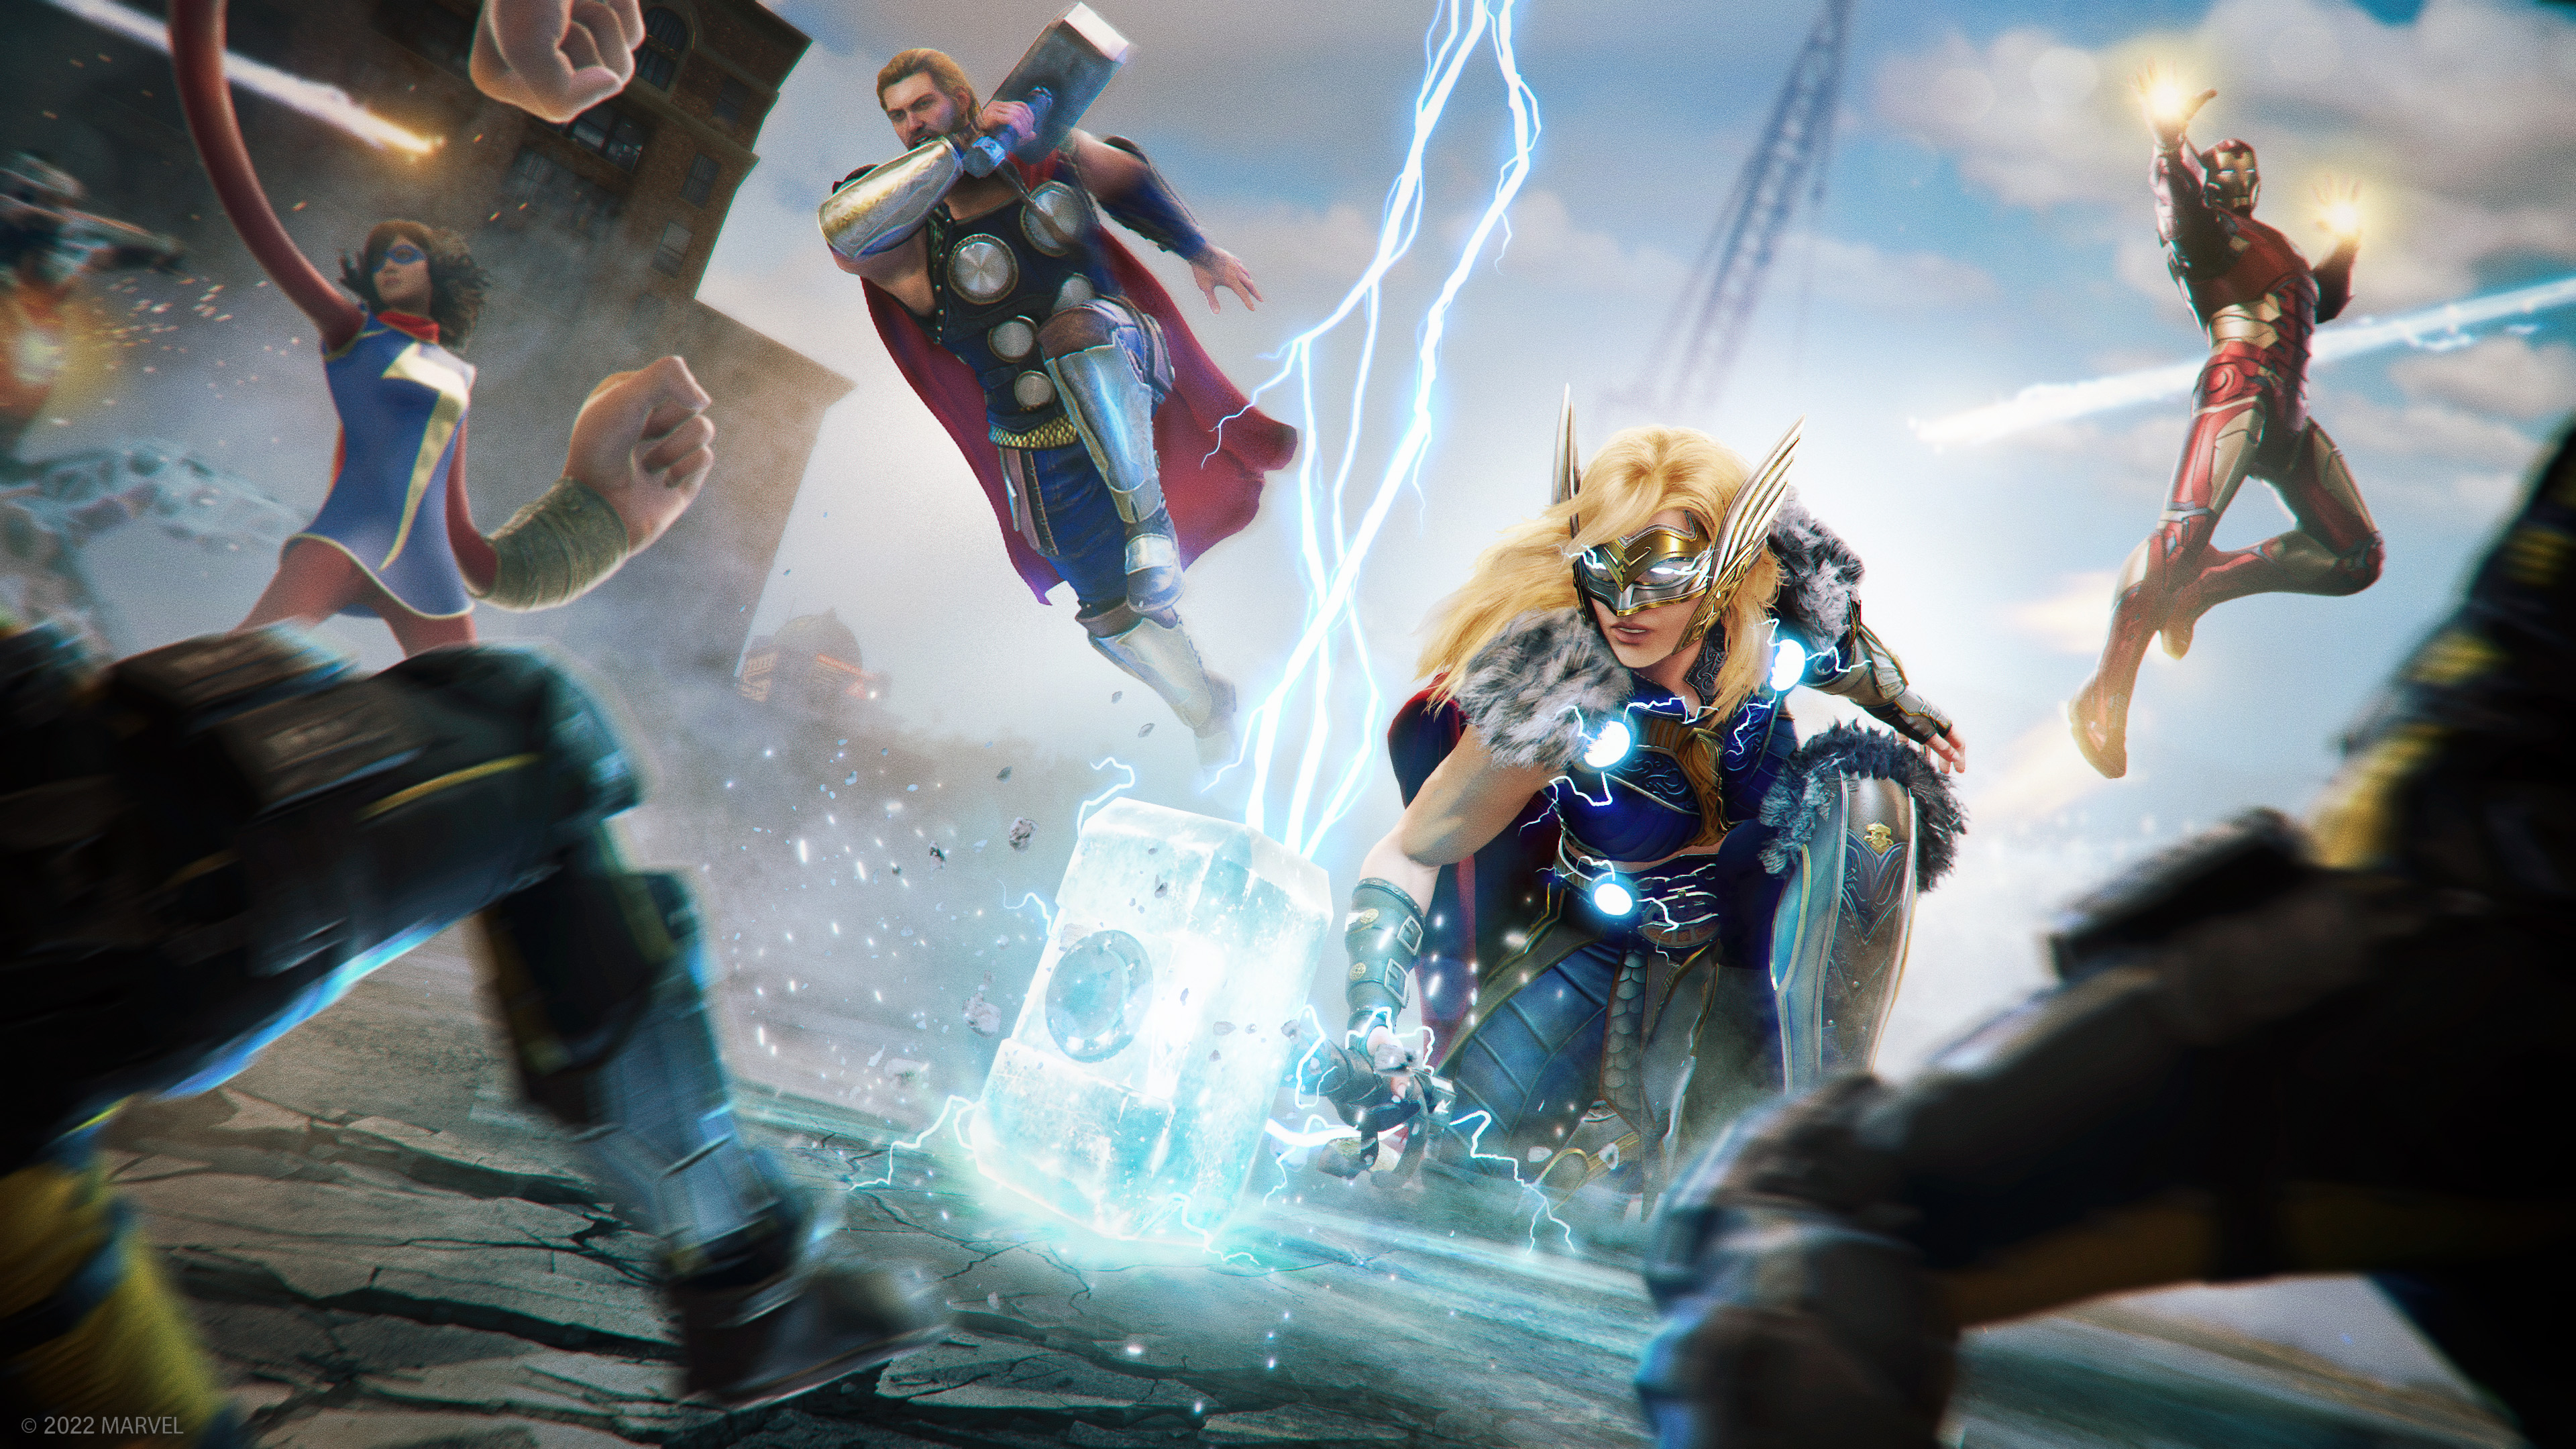 Marvels Avengers HD Wallpapers | 4K Backgrounds - Wallpapers Den